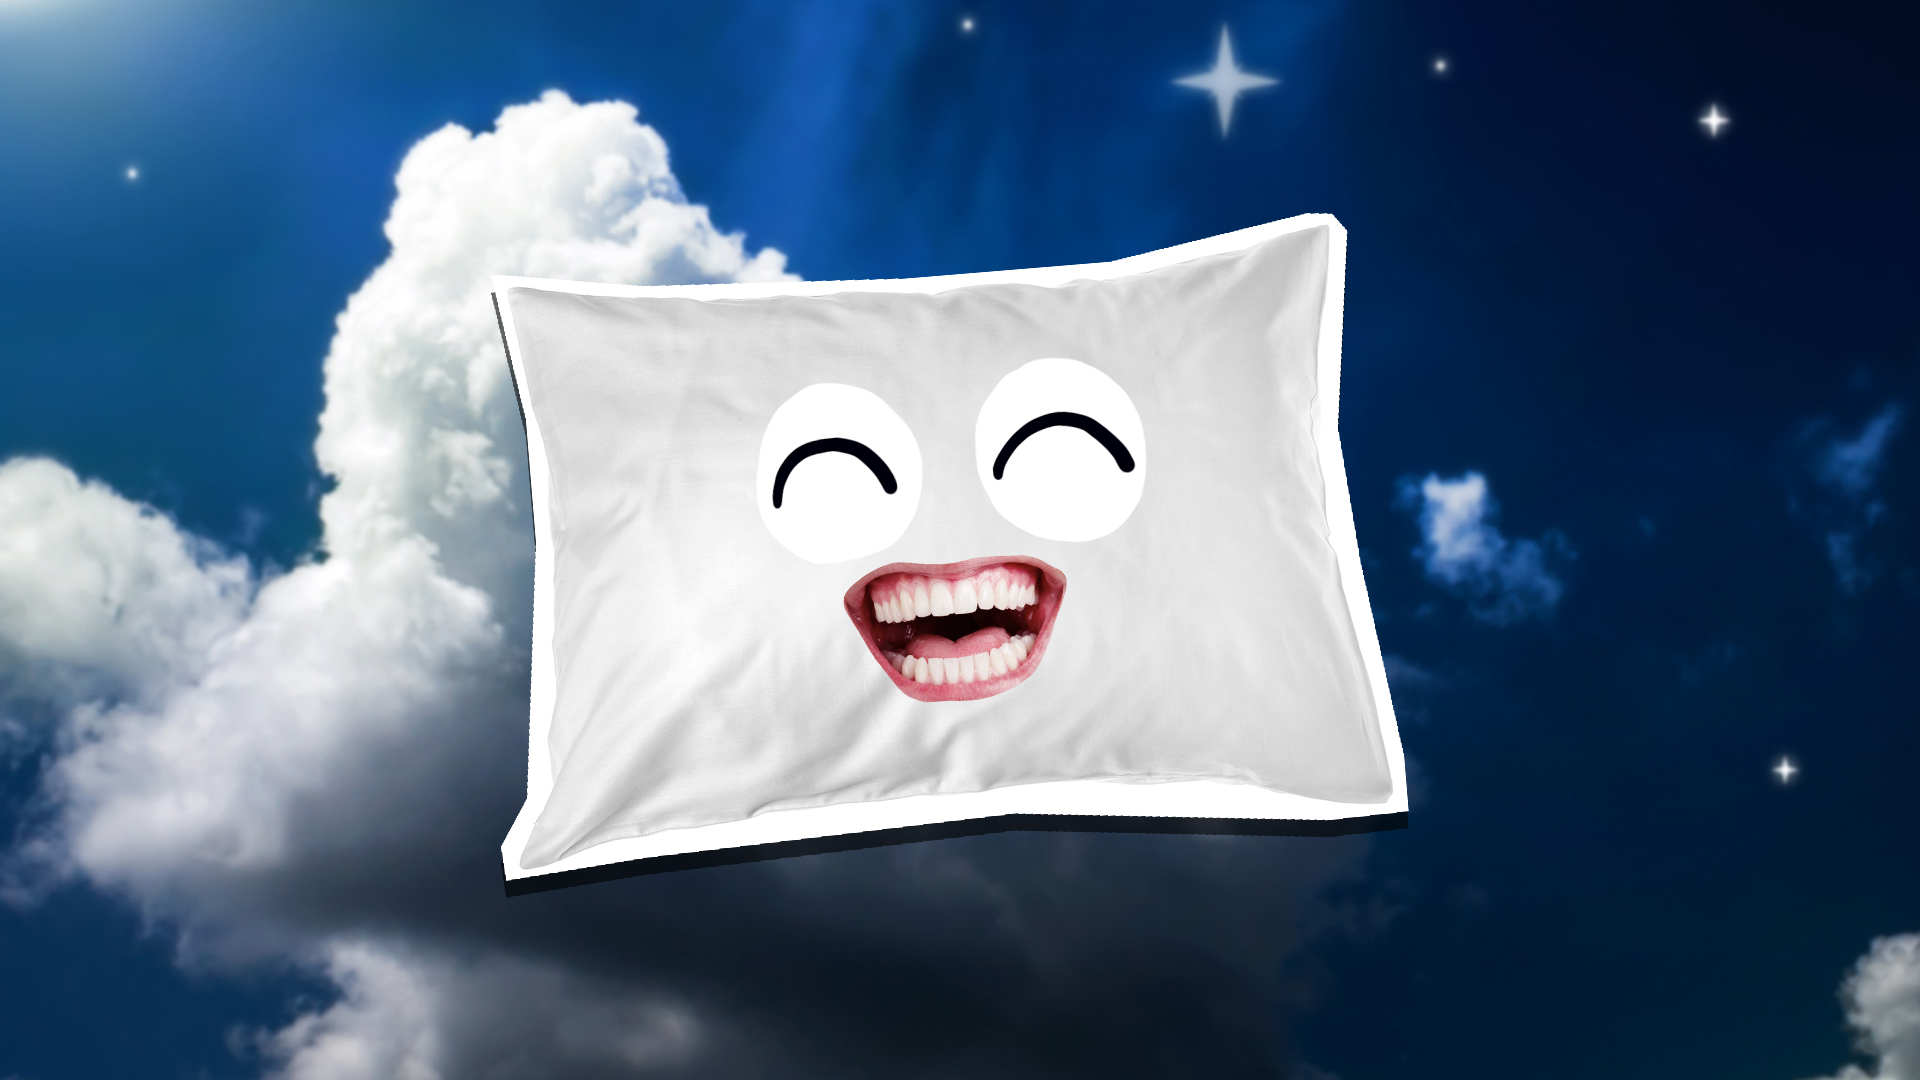 A squashy pillow set against a night sky